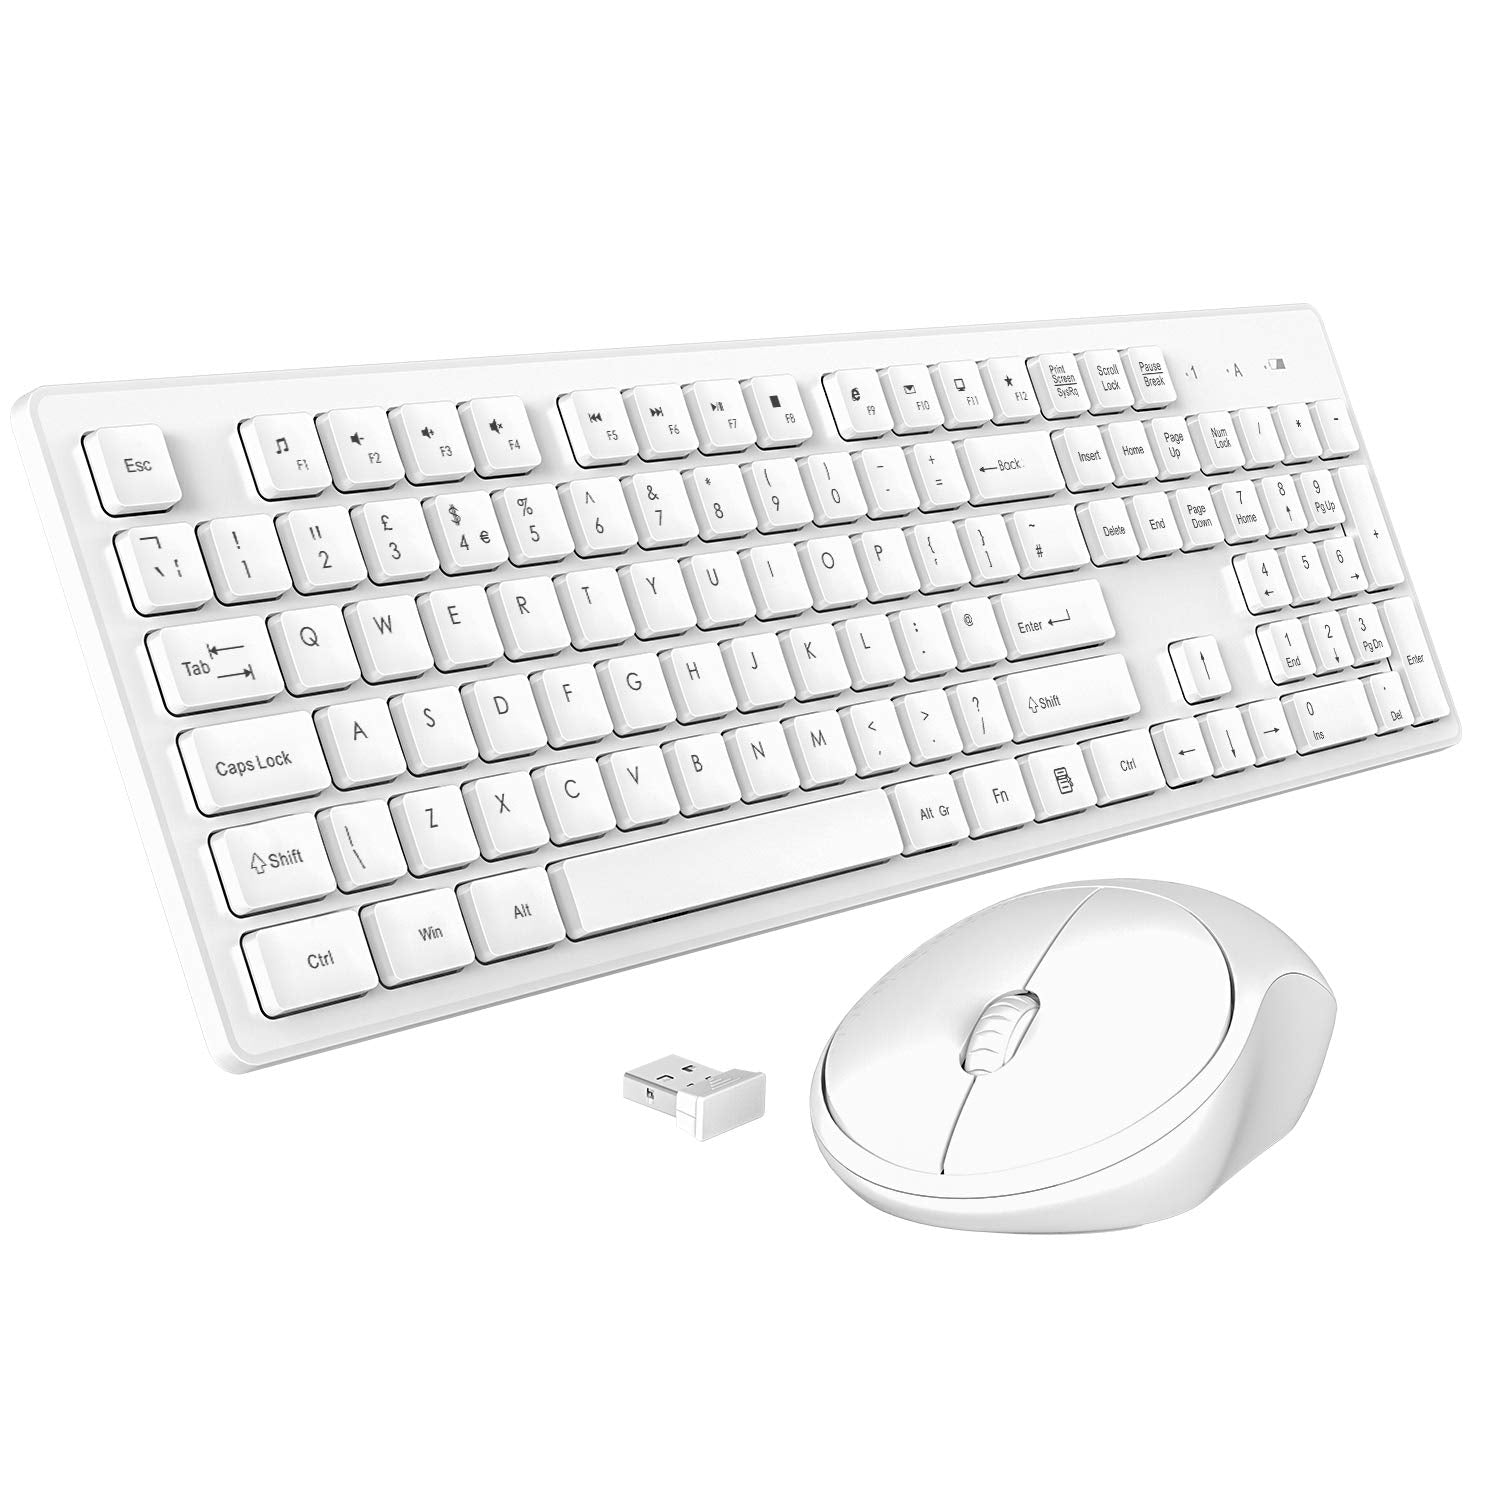 Wireless Keyboard & Mouse, TedGem Wireless Keyboard and Mouse 2.4G Mouse Keyboard Wireless Ergonomic Keyboard Mouse Set, 105 Keys for PC Desktops, Laptops, Mac OS & Windows (UK Layout) (White)